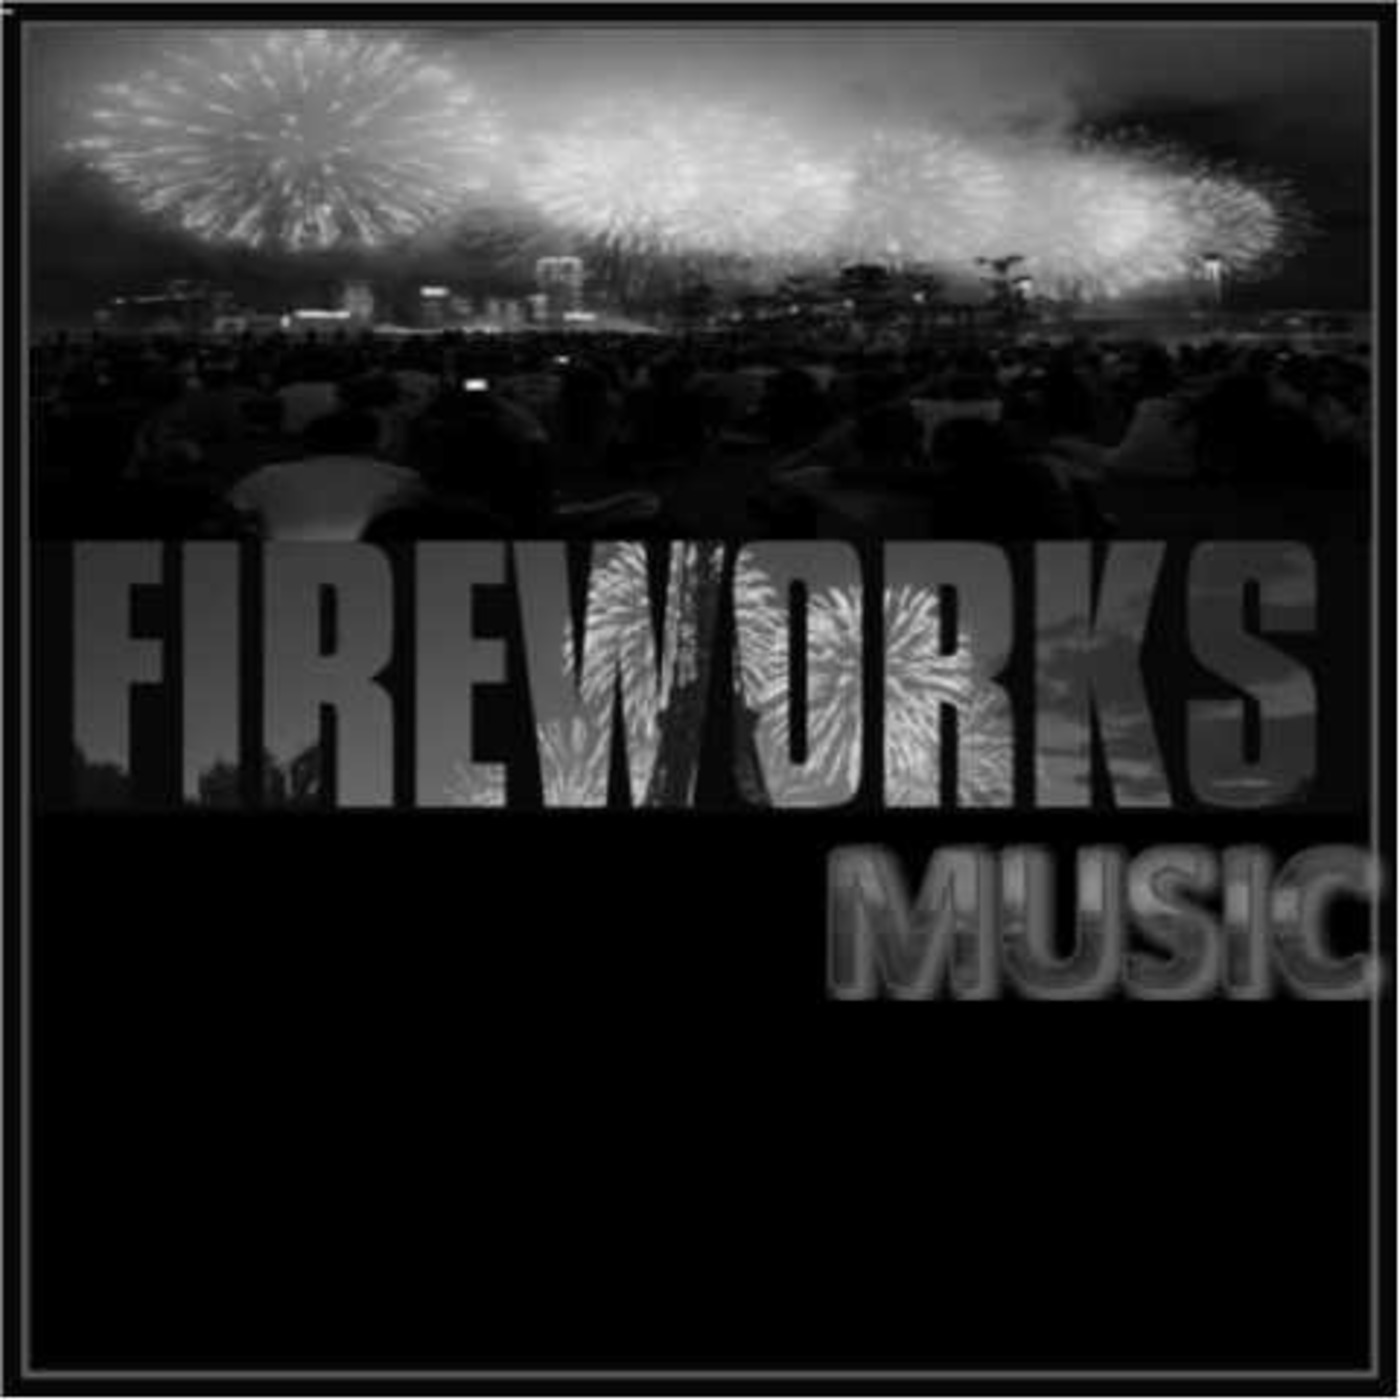 Fireworks Music